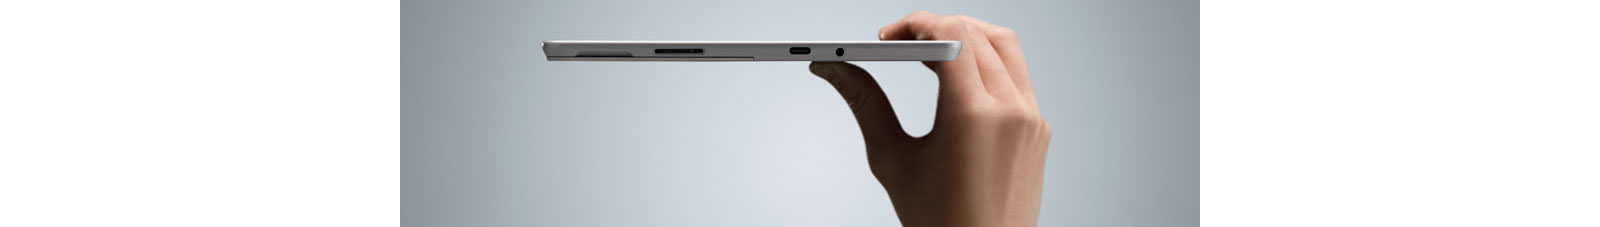 Surface Go LTE モデル